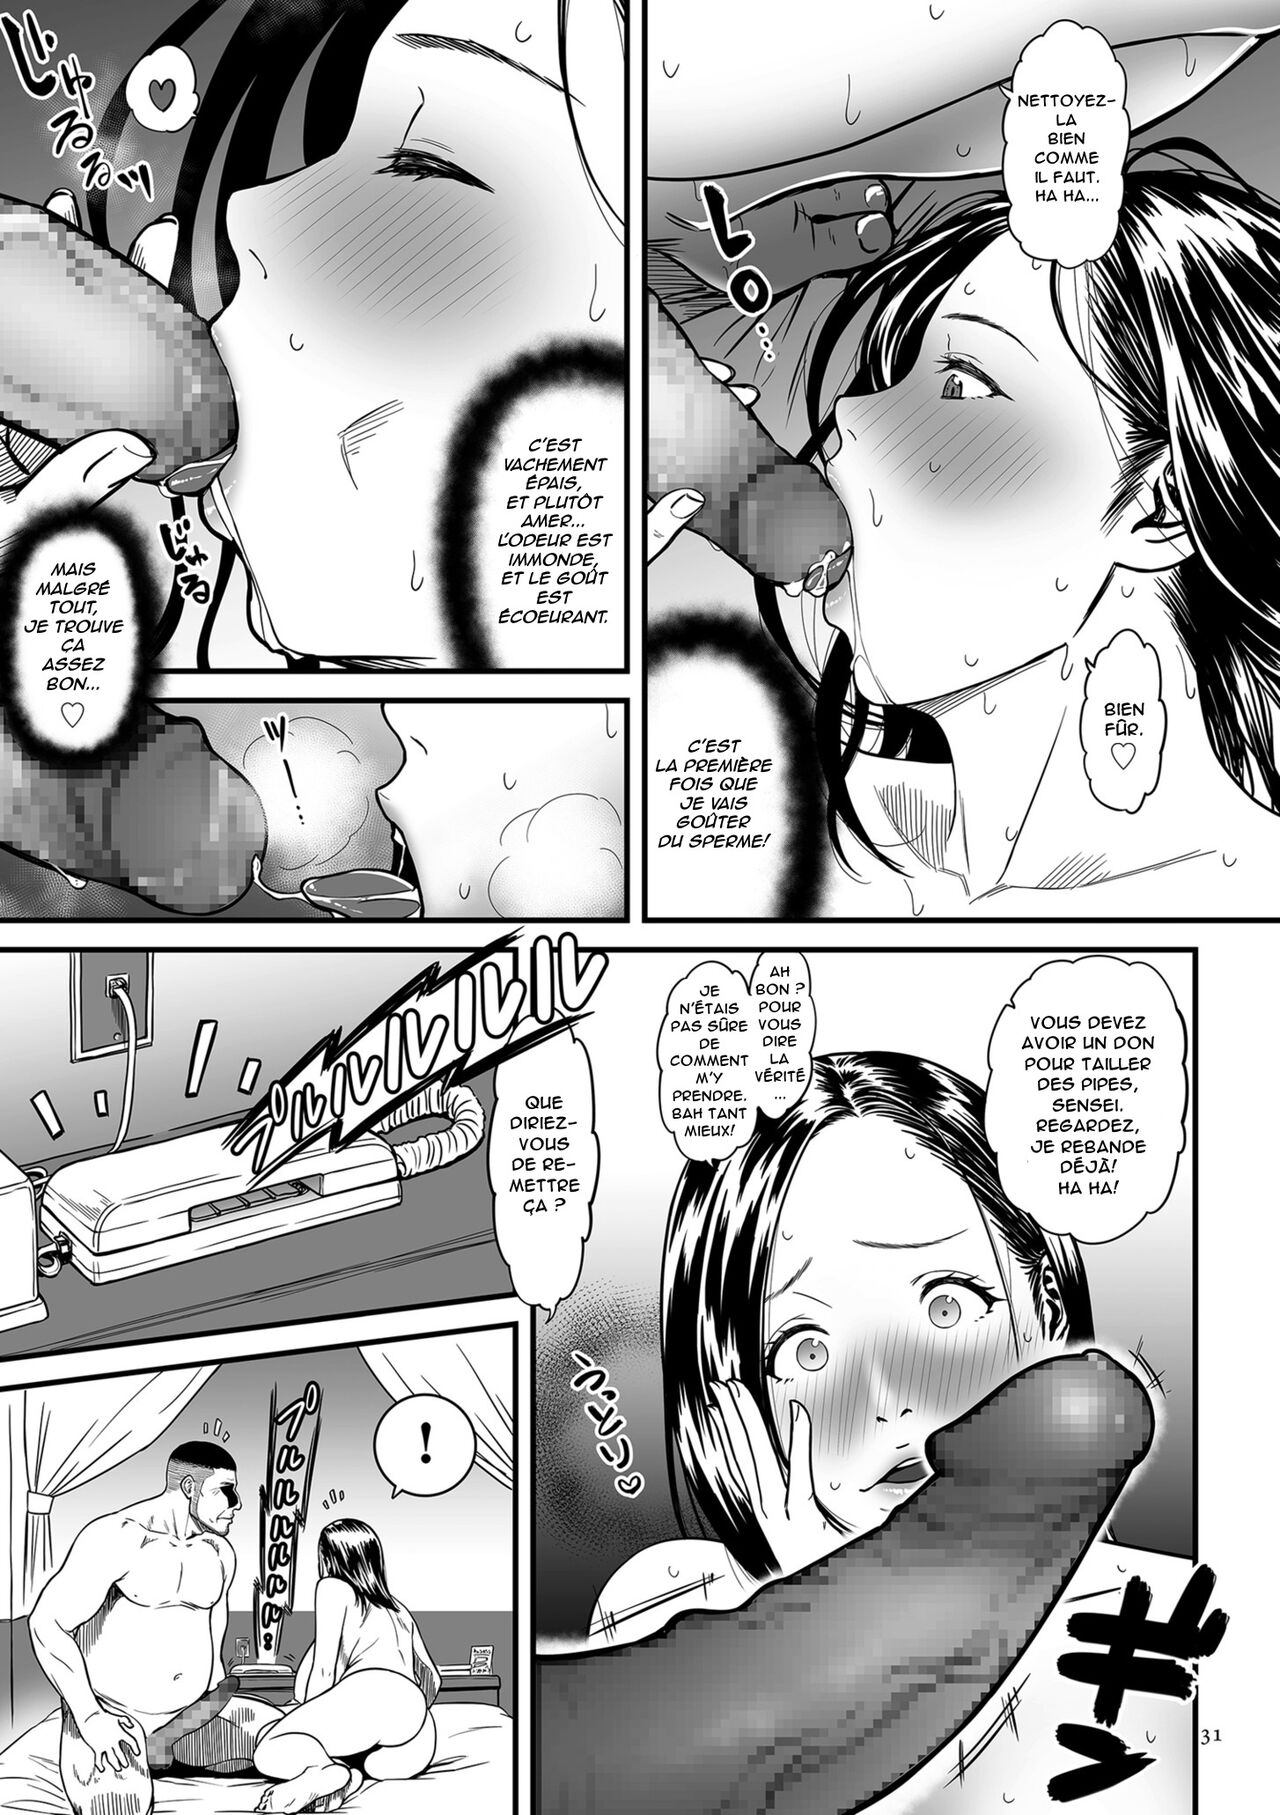 Onna Eromangaka ga Inran da nante Gensou ja nai?  Is It Not a Fantasy That The Female Erotic Mangaka Is a Pervert? numero d'image 31